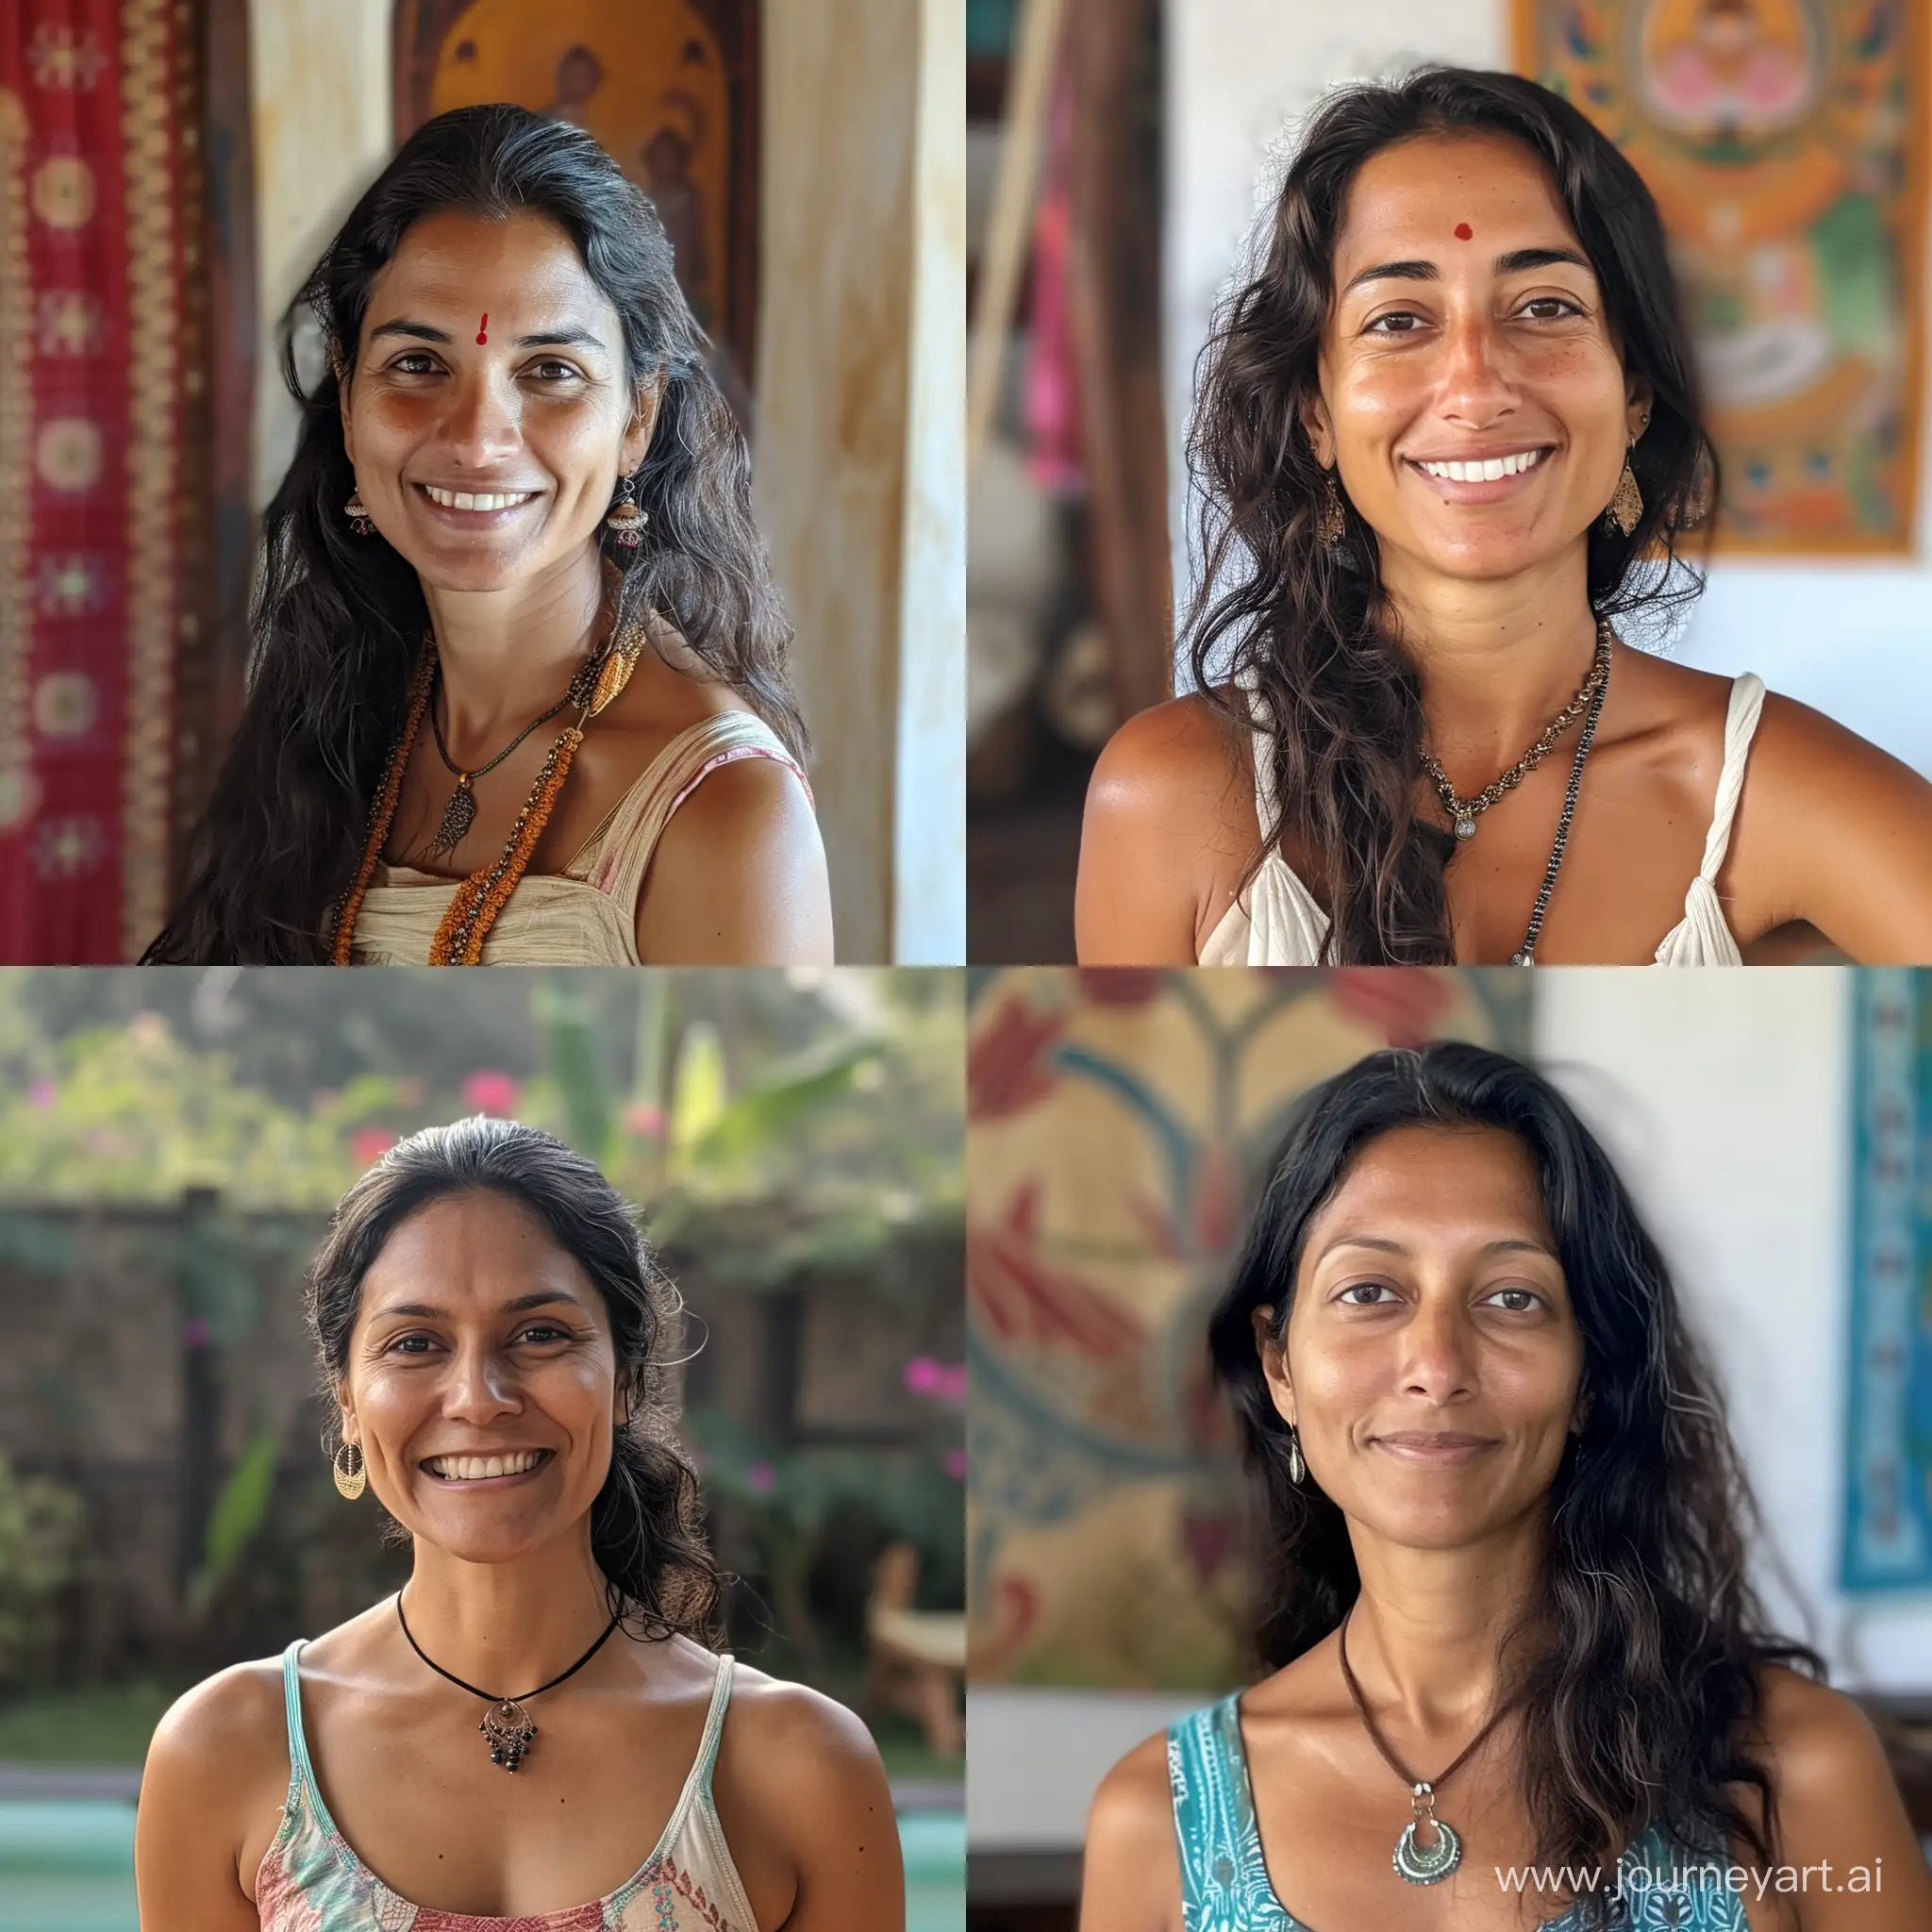 Experienced-Indian-Yoga-Instructor-at-40-Mastering-Asanas